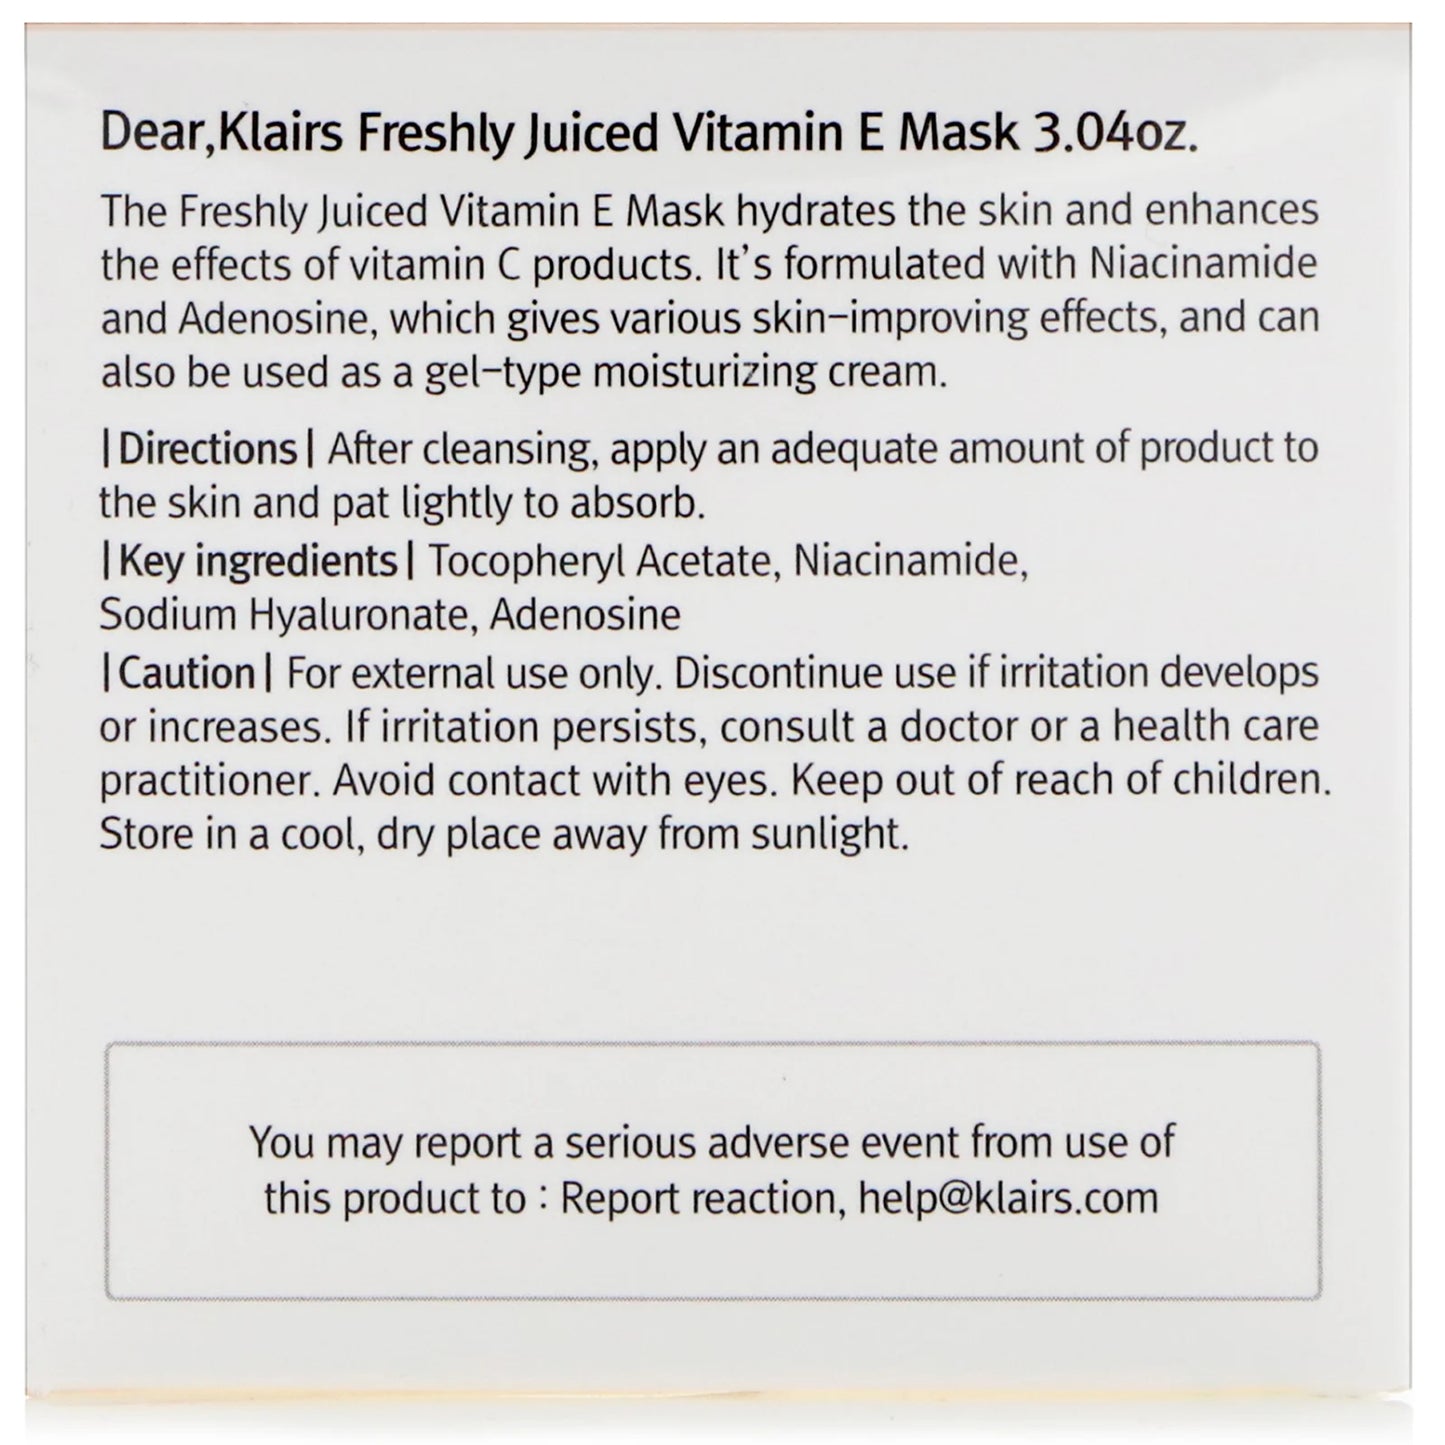 Dear, Klairs, Freshly Juiced Vitamin E Beauty Mask